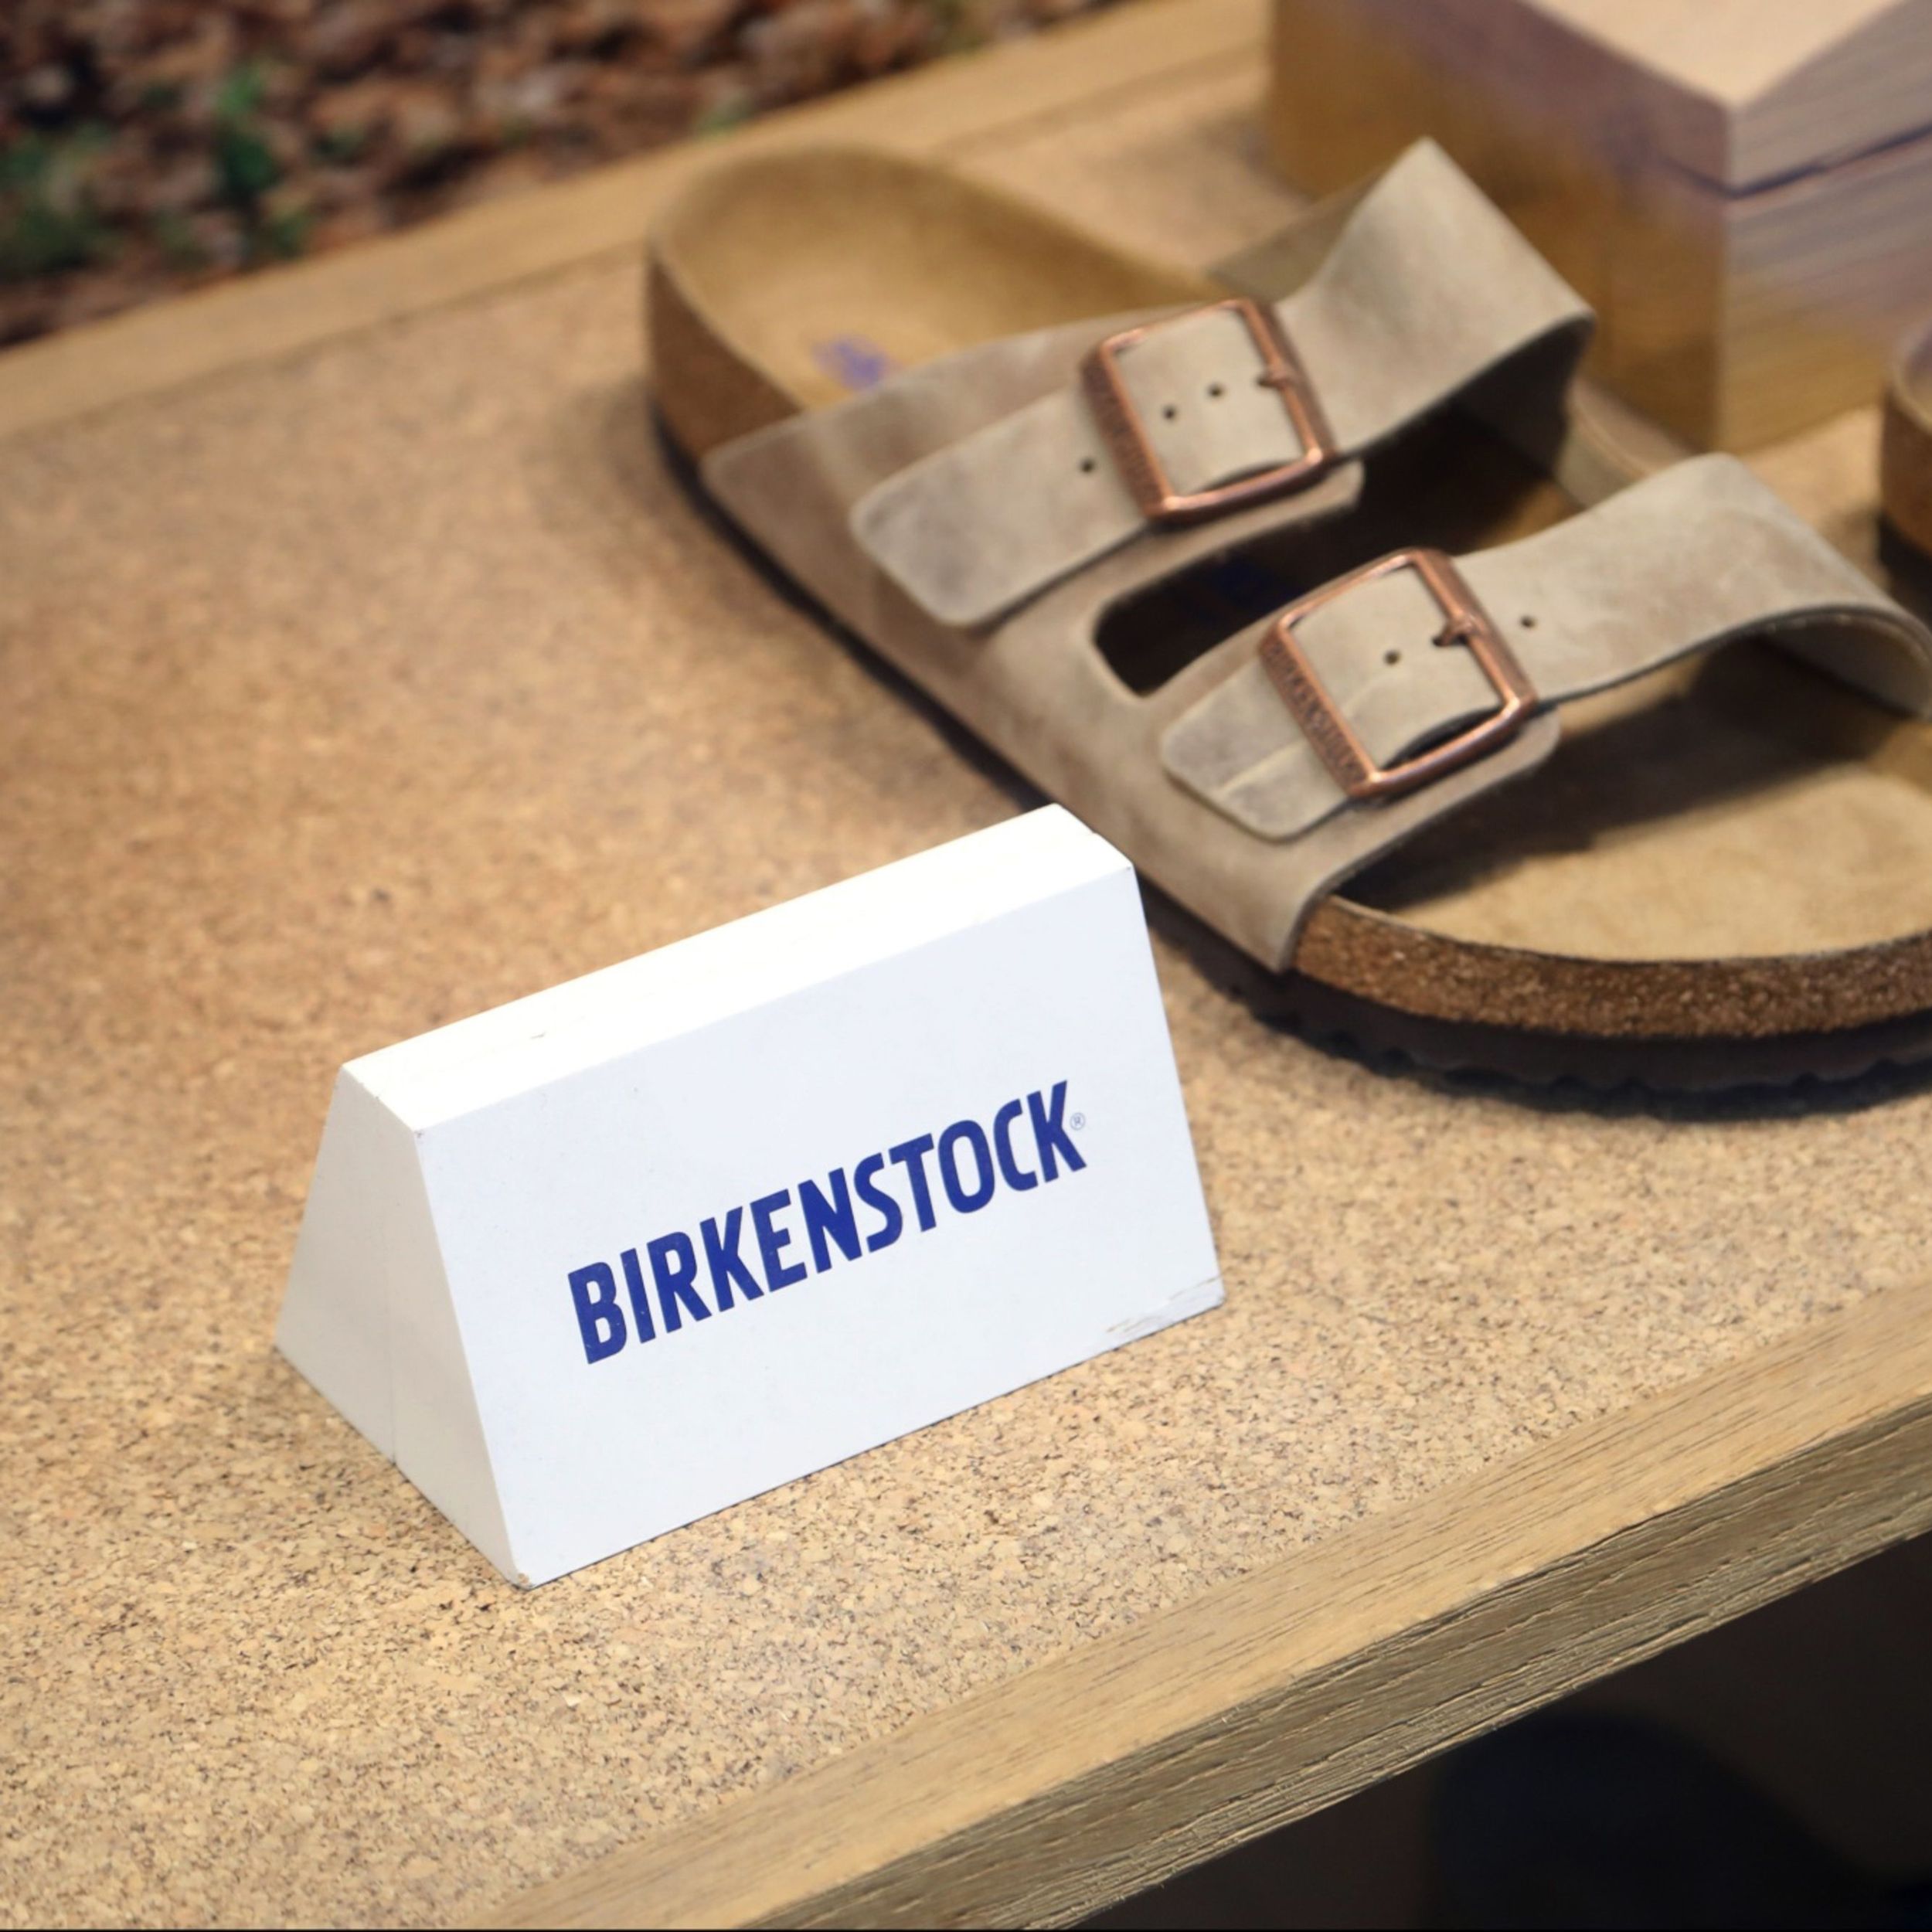 Birkenstock worth billions after IPO